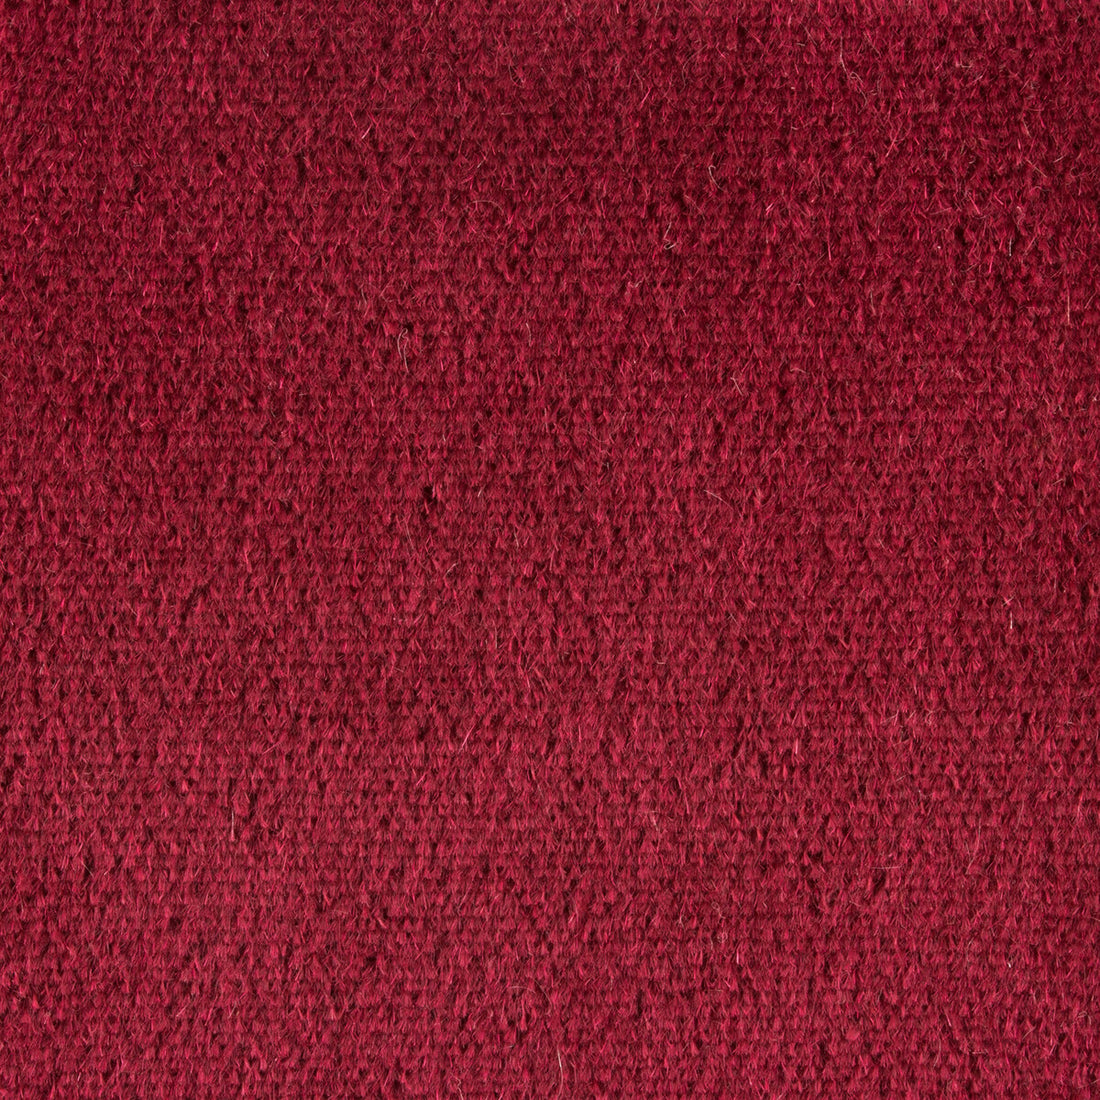 Autun Mohair Velvet fabric in crimson color - pattern BR-89778.174.0 - by Brunschwig &amp; Fils